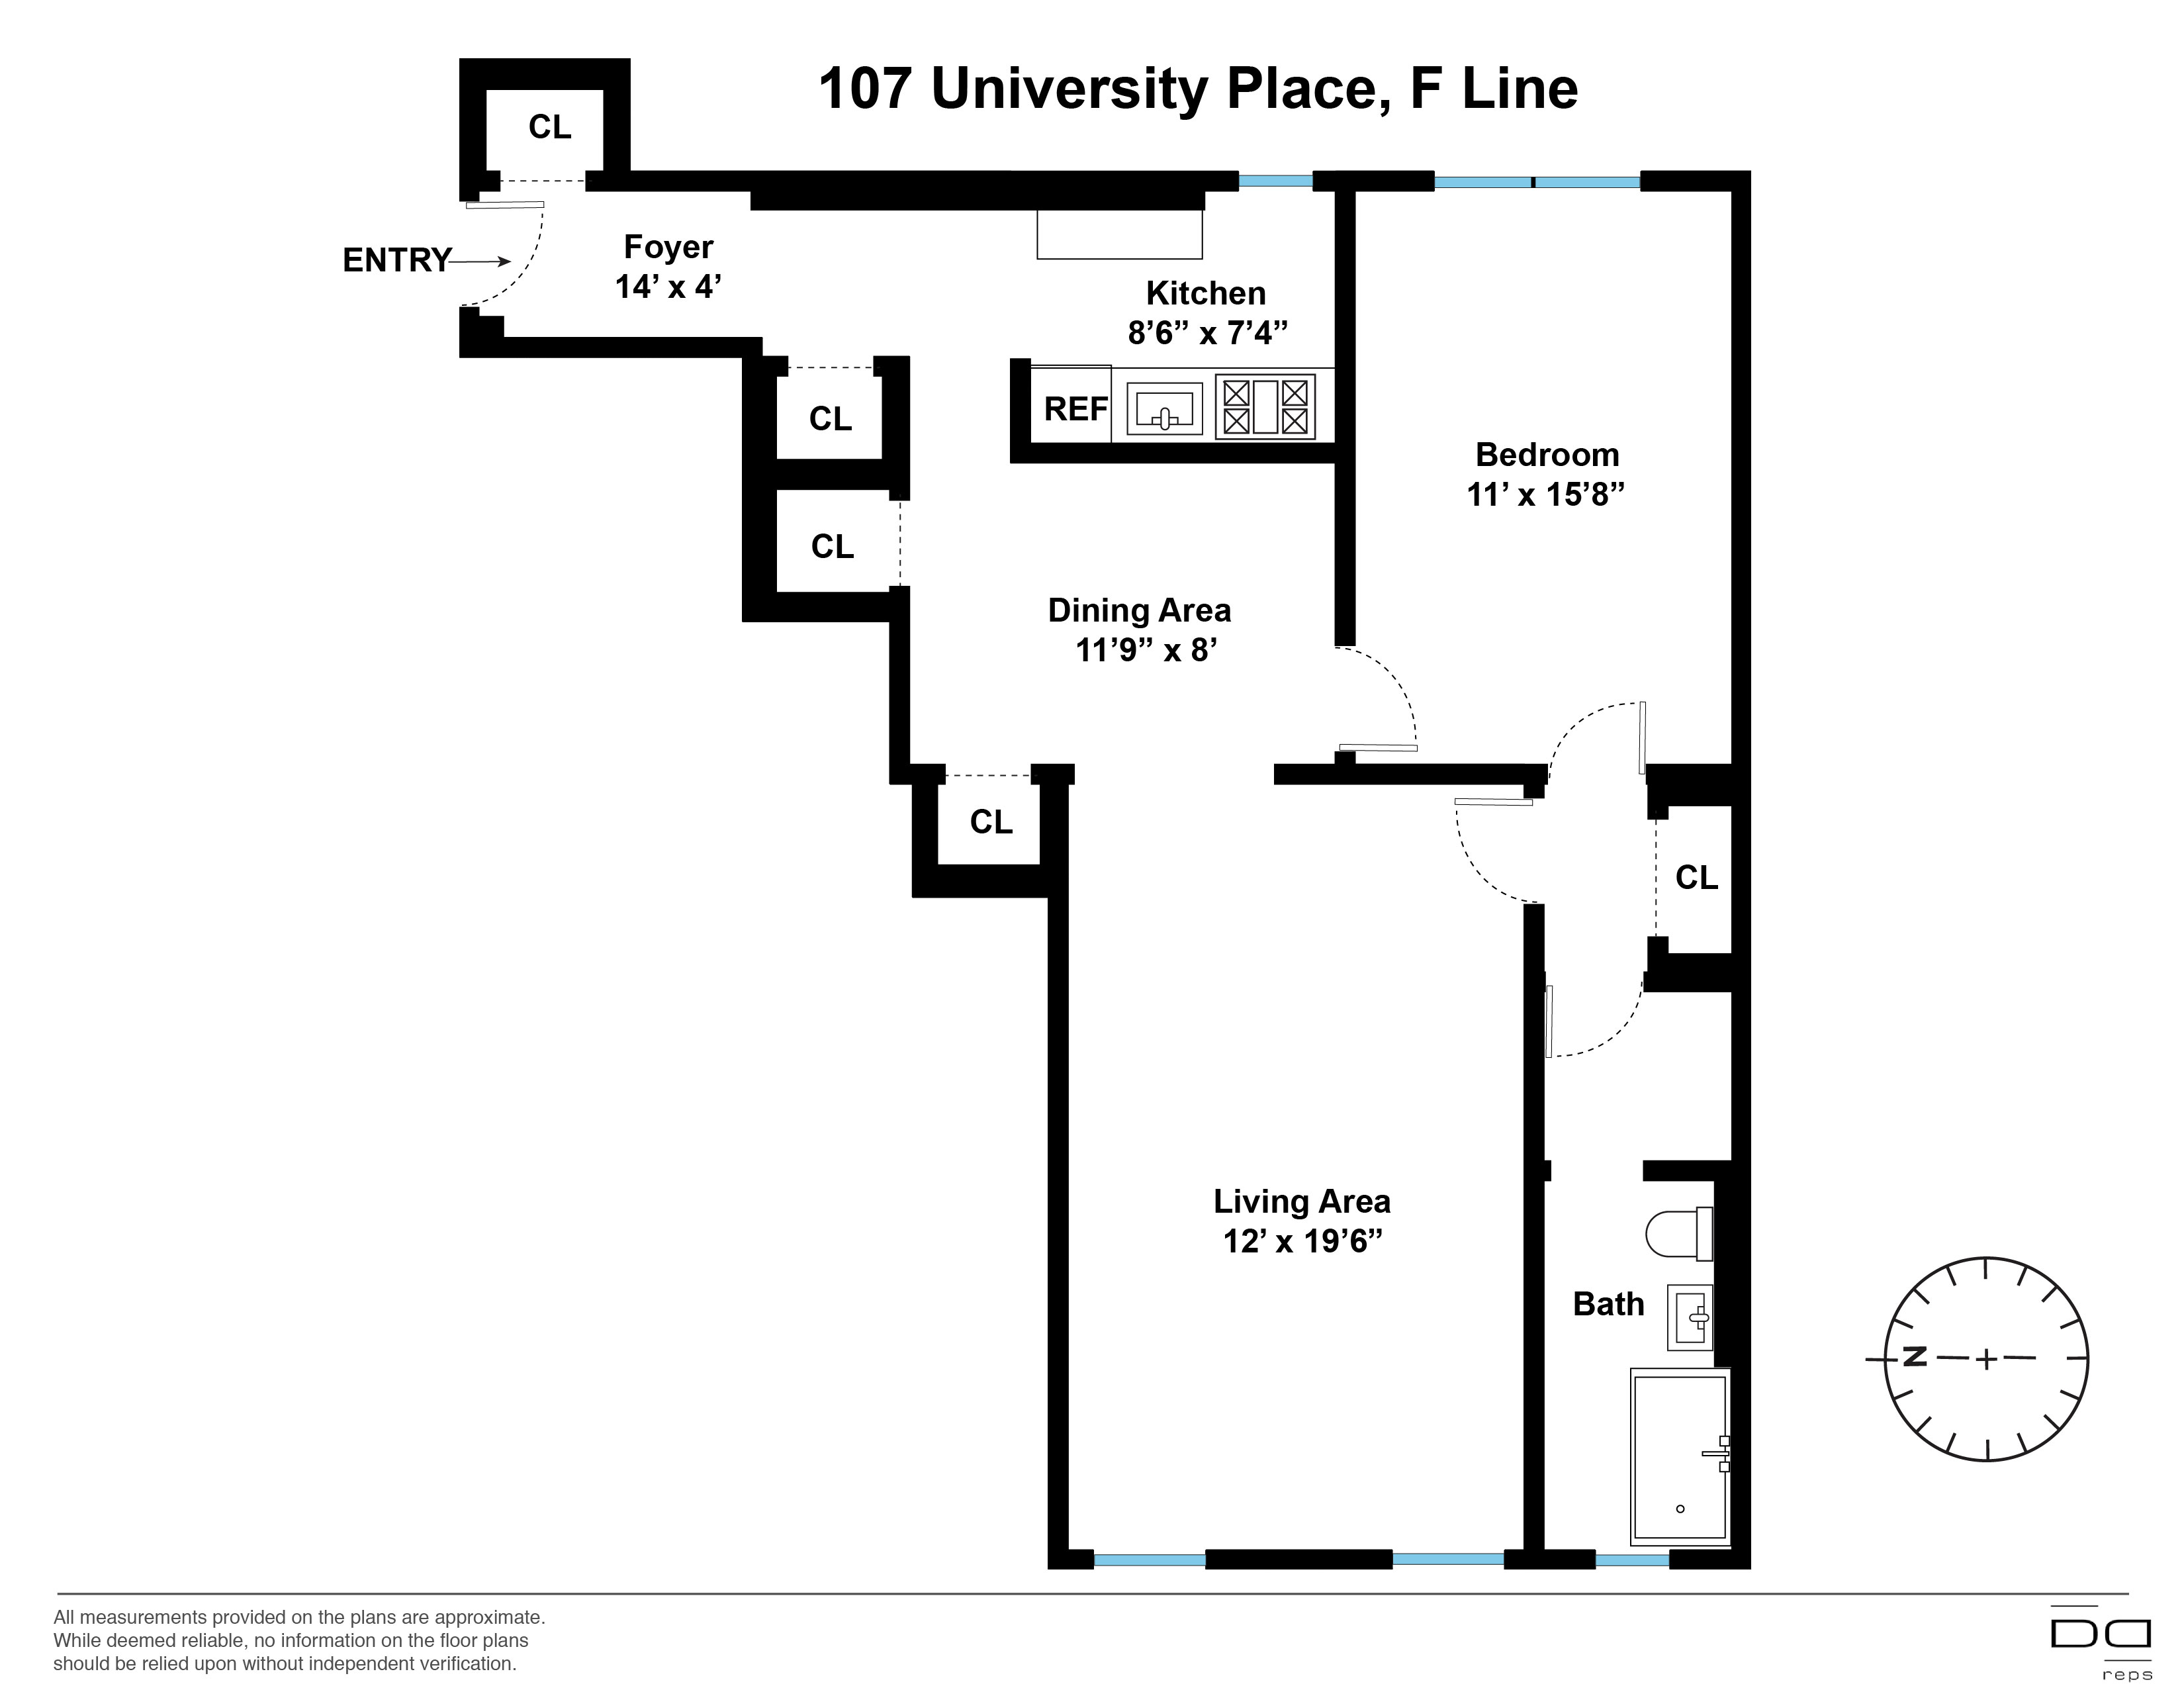 F Line 107 University Place Floor Plan